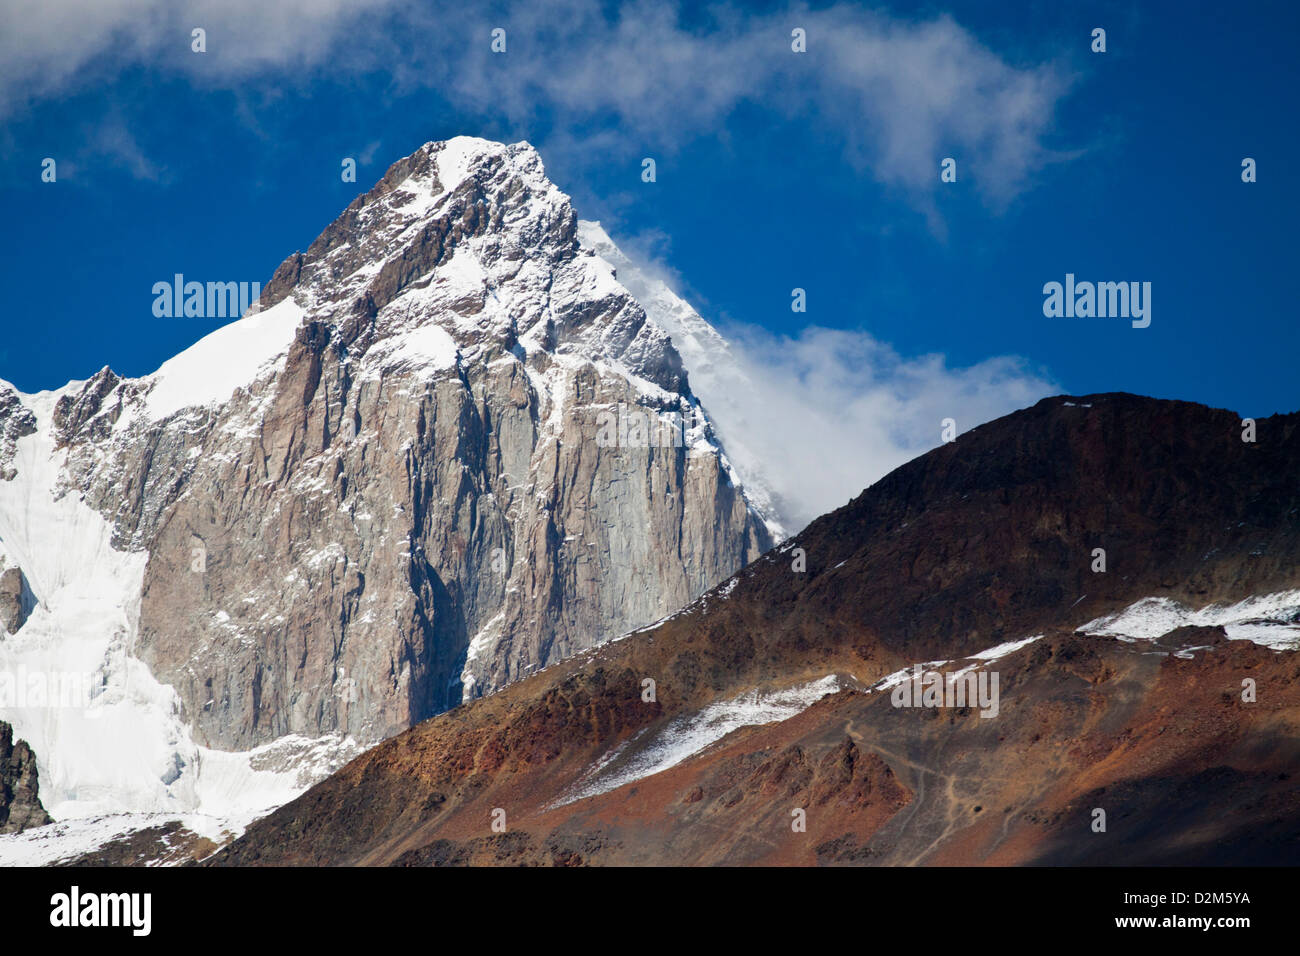 North peak of Mount Ushba in the Greater Caucasus, seen from the  Shagatkhumari plateau in Georgia's Svaneti region Stock Photo - Alamy